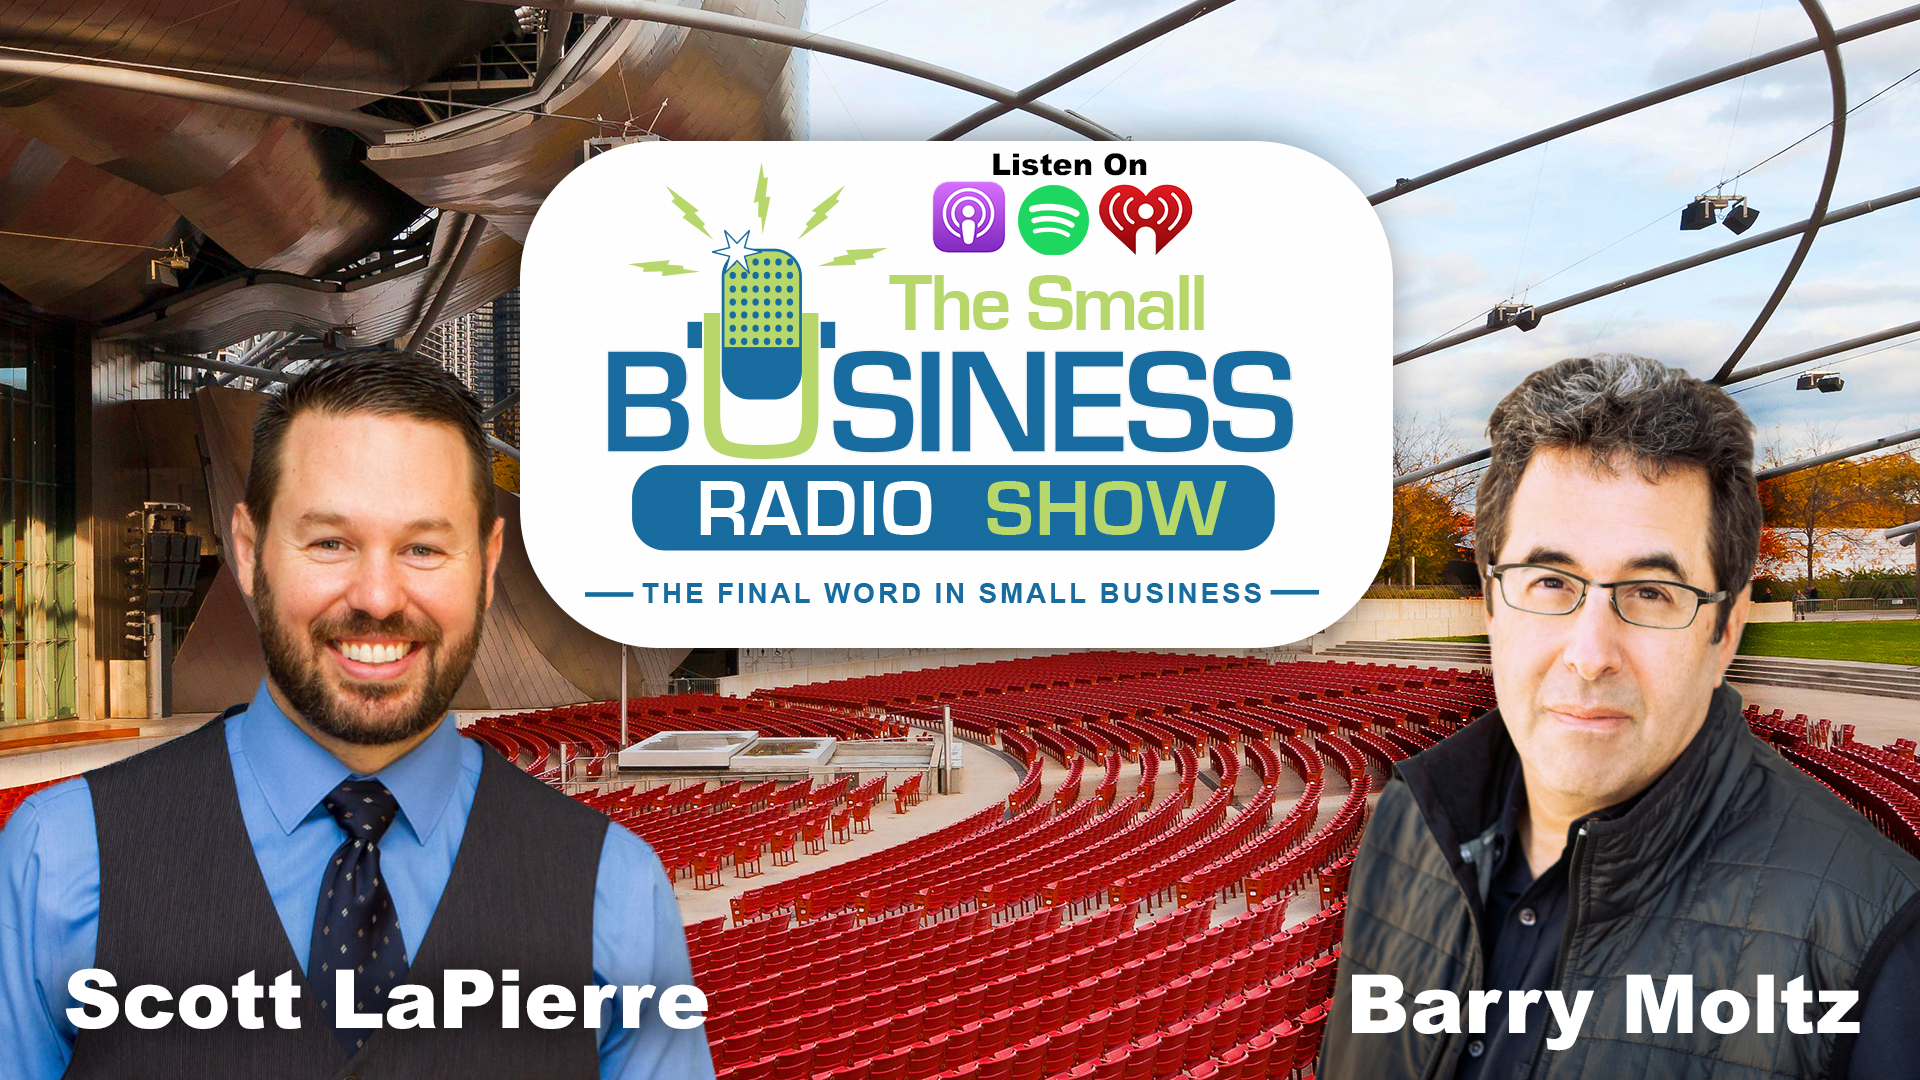 Scott LaPierre on The Small Business Radio Show finances